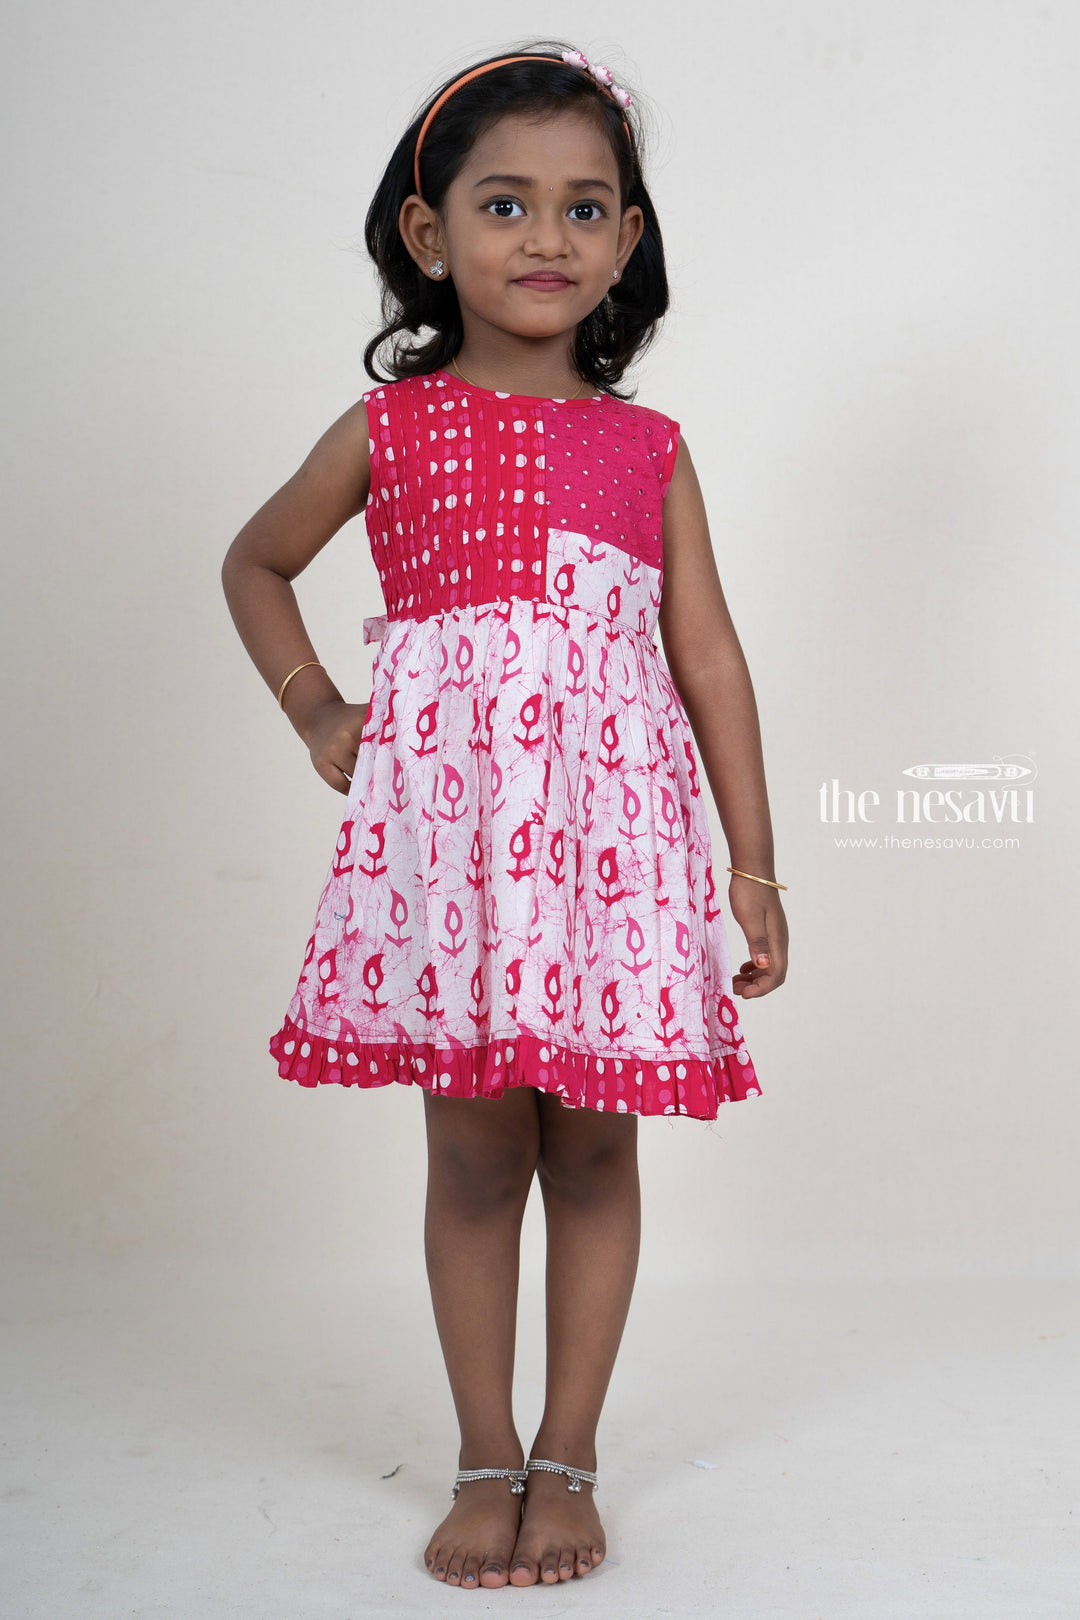 The Nesavu Baby Frock / Jhabla Hot Pink Pin-Tucked Tie-Dyed Sleeveless Cotton Gown For Baby Girls psr silks Nesavu 14 (6M) / Deeppink BFJ330A